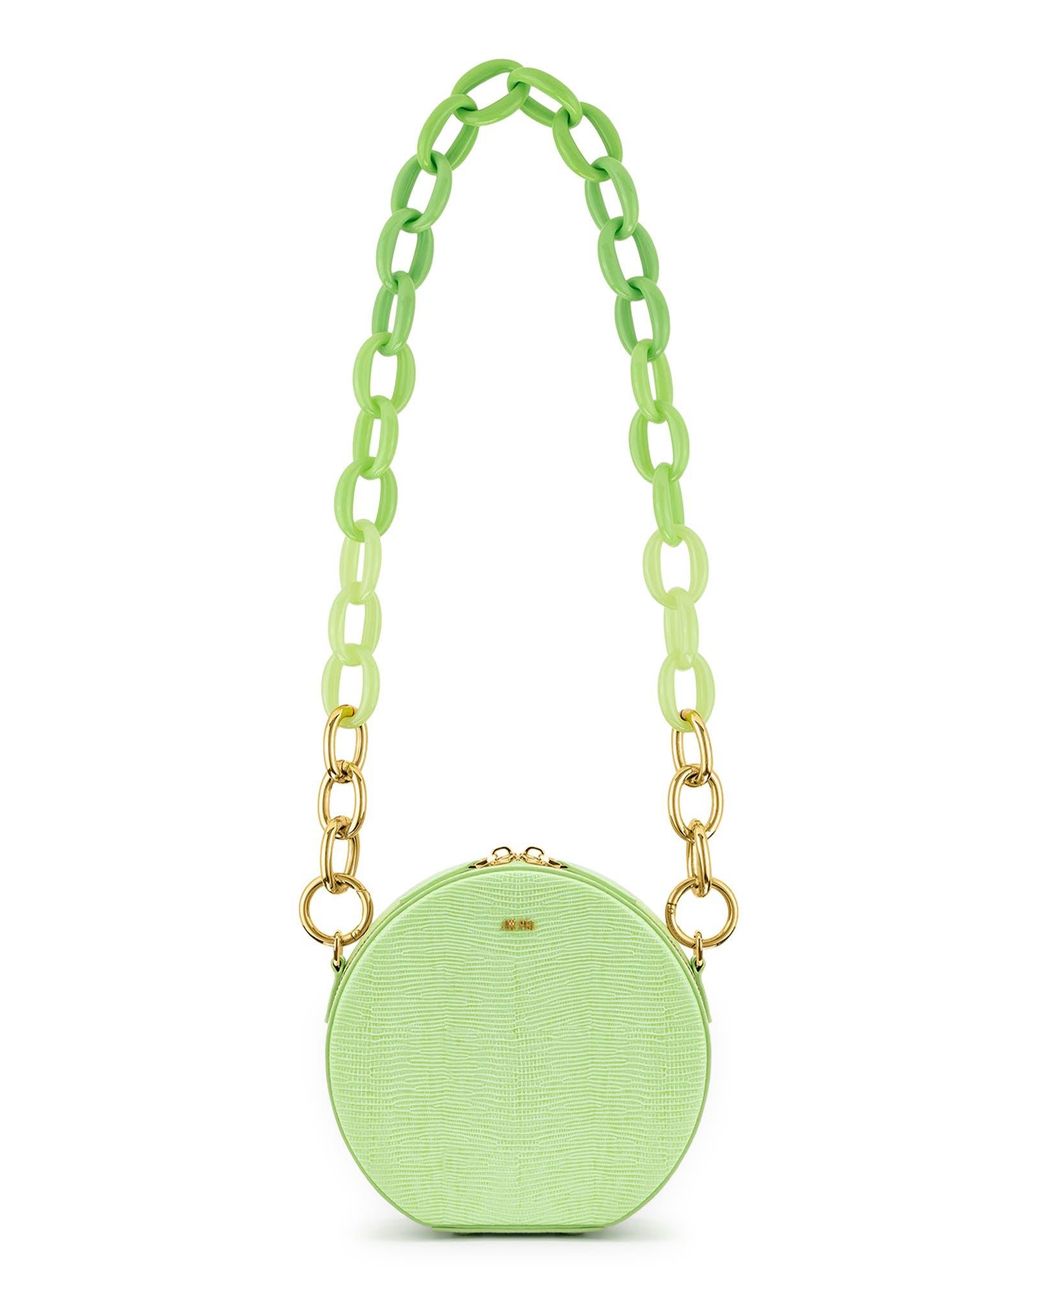 JW PEI Luna Acrylic Chain Circle Bag in Green | Lyst